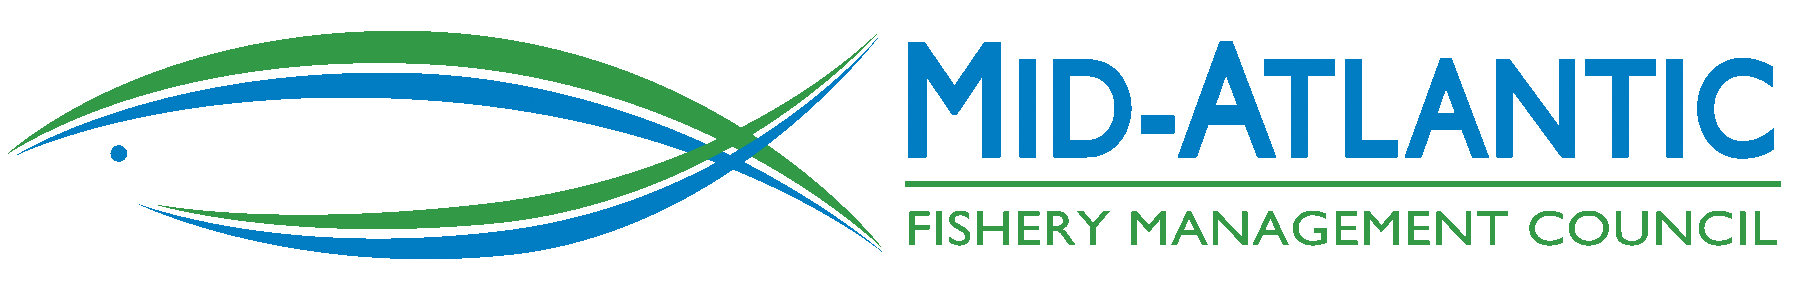 MAFMC Logo